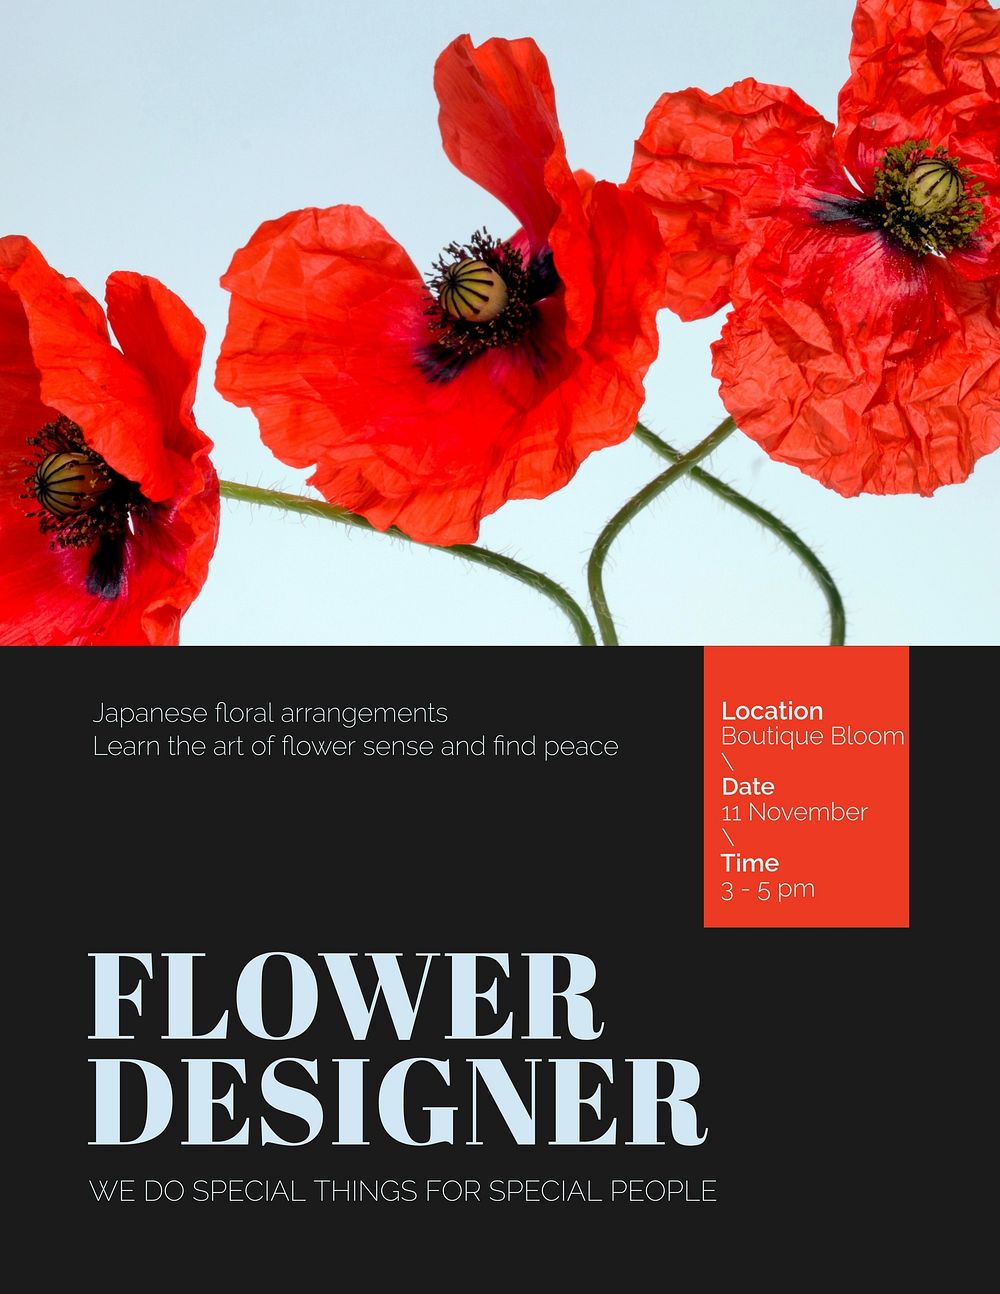 Aesthetic flower flyer editable template, event advertisement